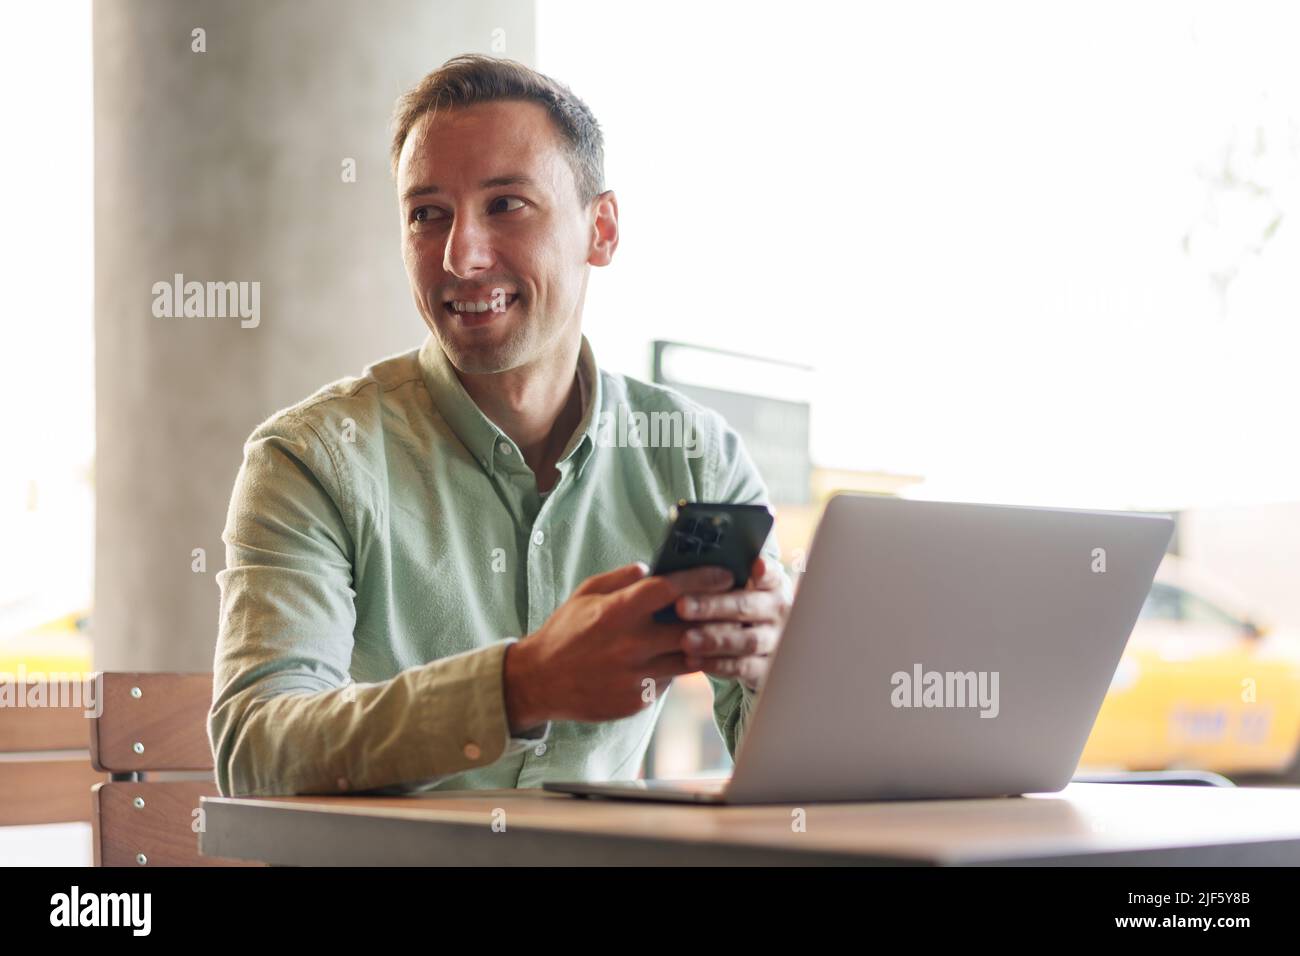 Confident businessman using smartphone sitting in restaurant Stock Photo